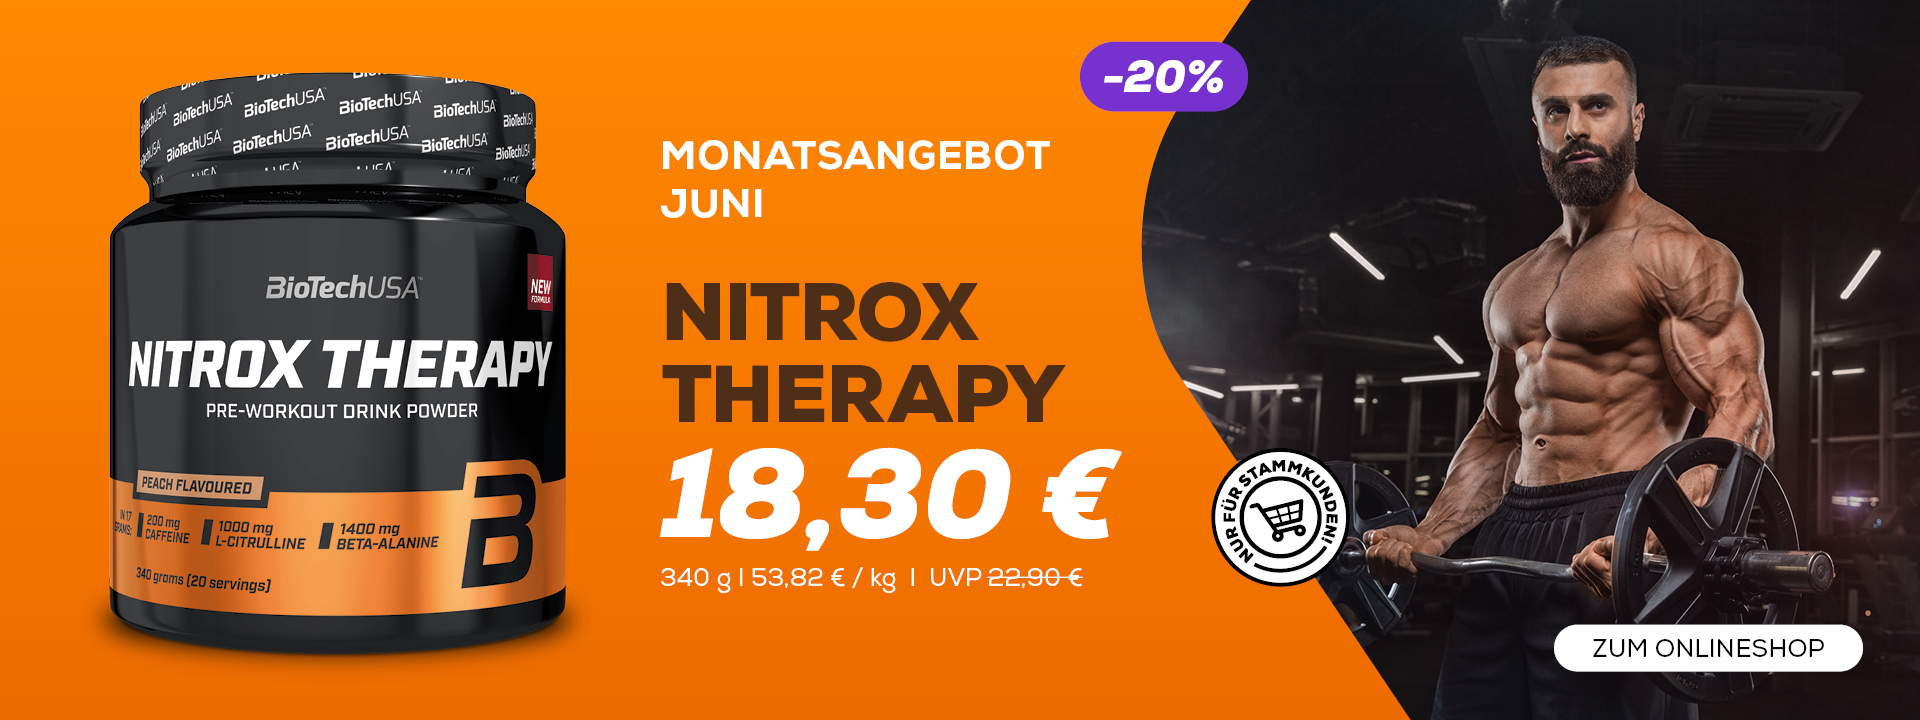 Nitrox Therapy 340g -20%